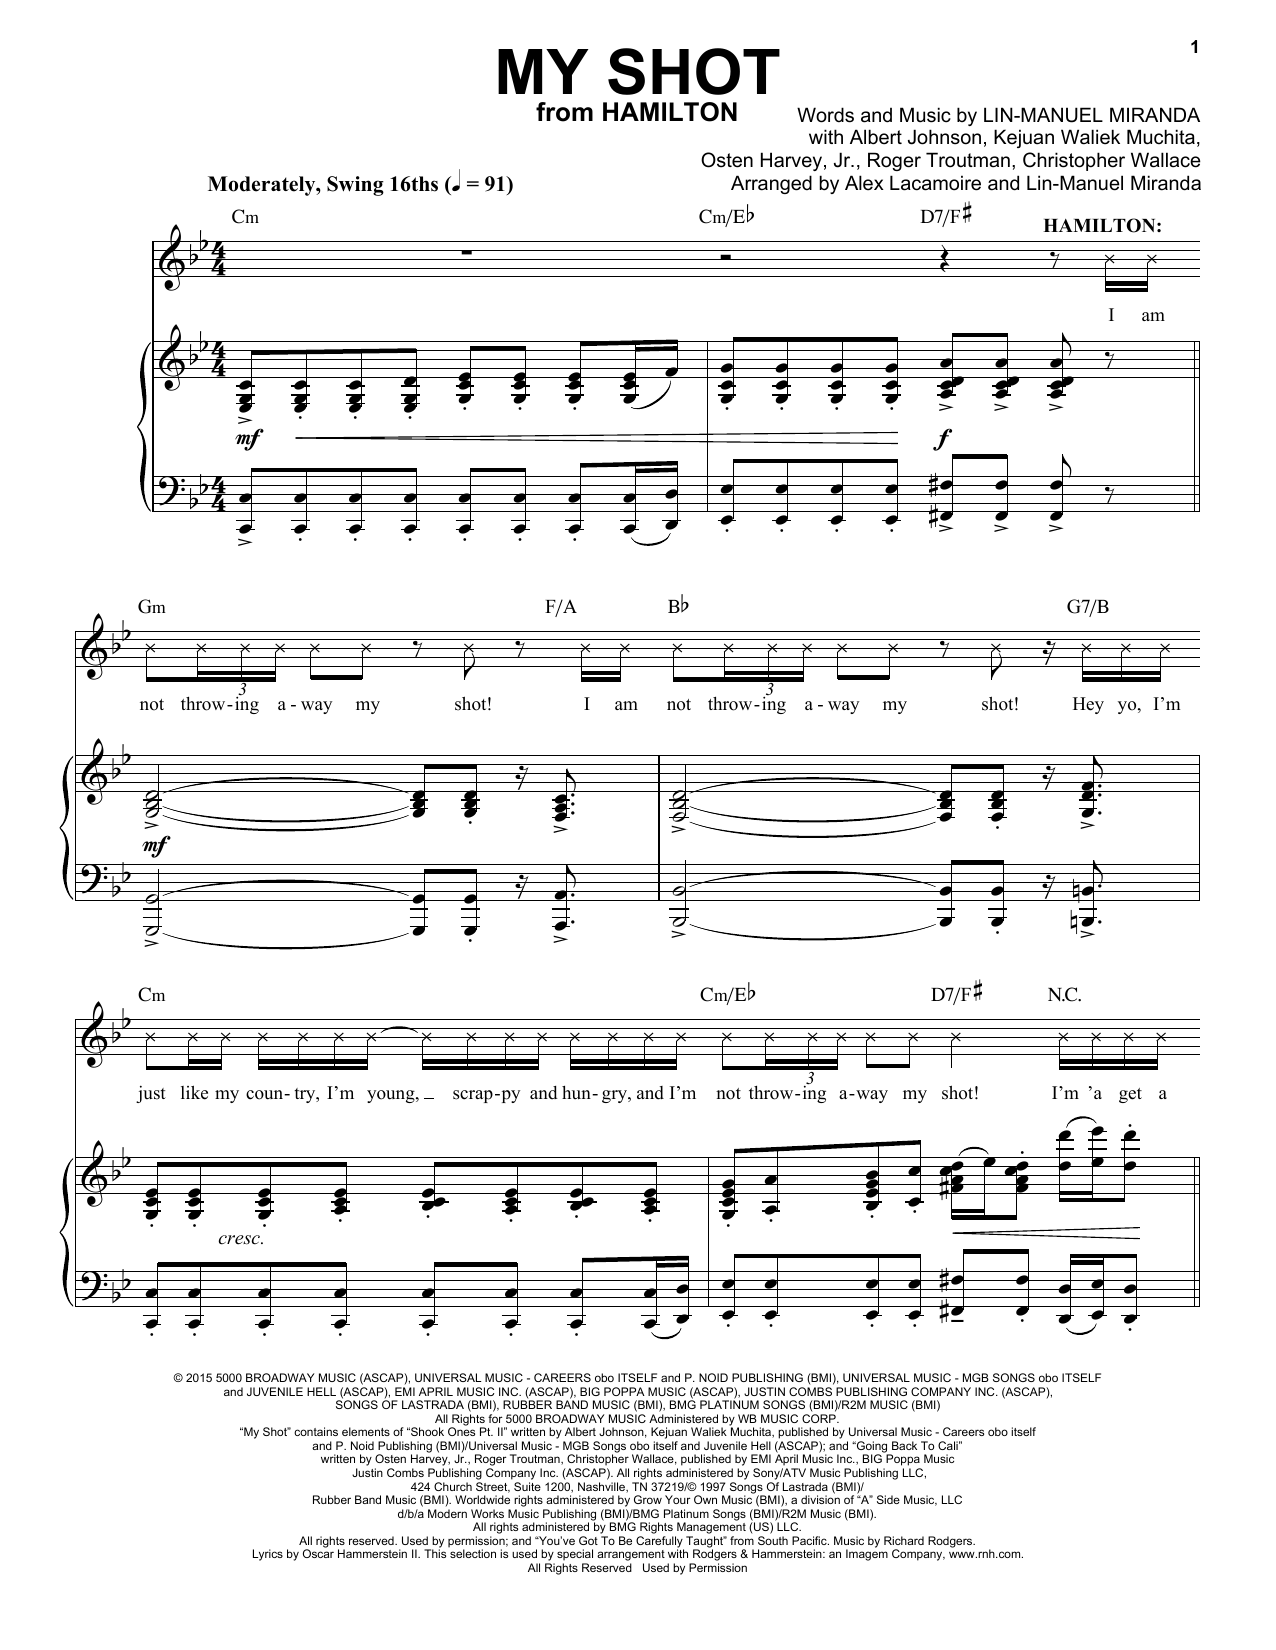 Lin-Manuel Miranda My Shot (from Hamilton) Sheet Music Notes & Chords for Violin Solo - Download or Print PDF